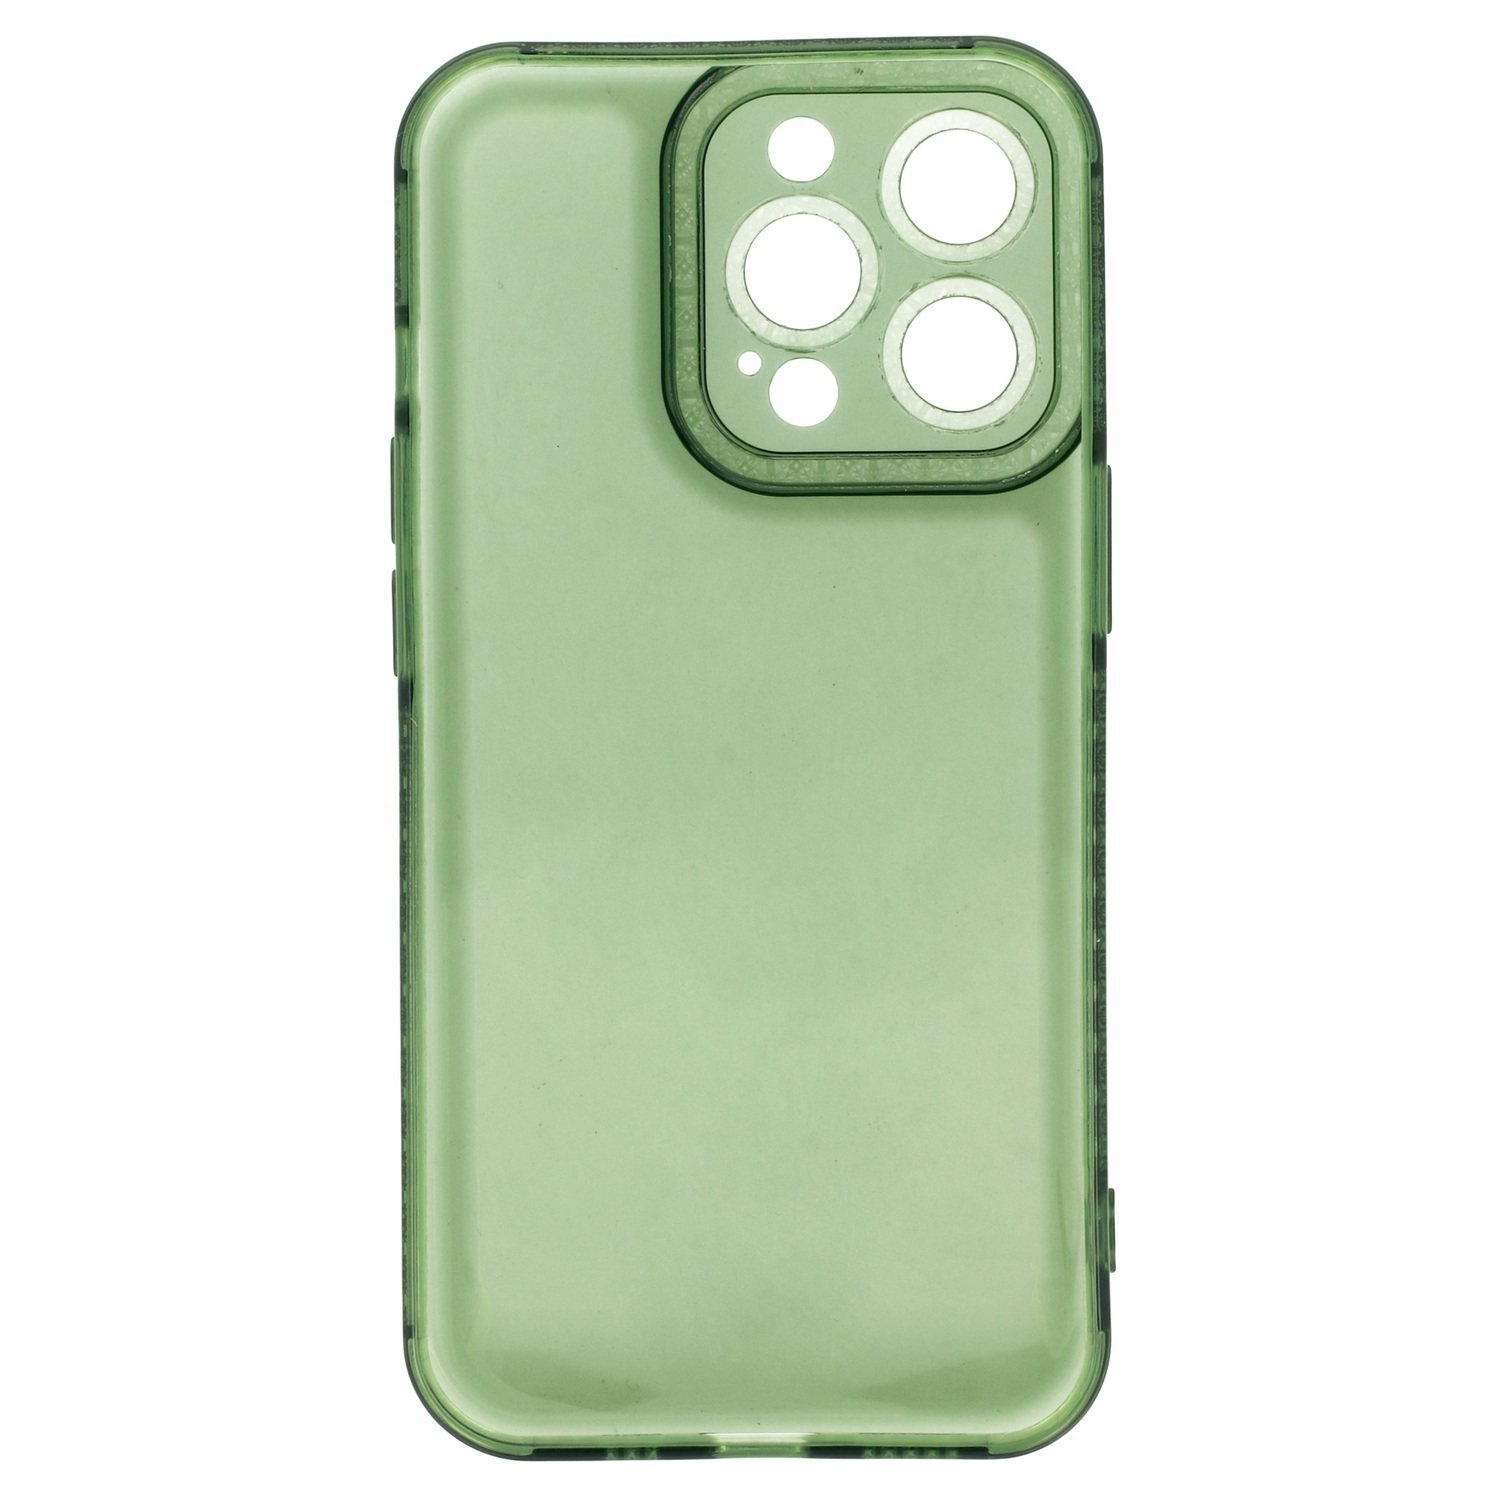 Pokrowiec etui silikonowe Crystal Diamond Case zielone APPLE iPhone XS / 5